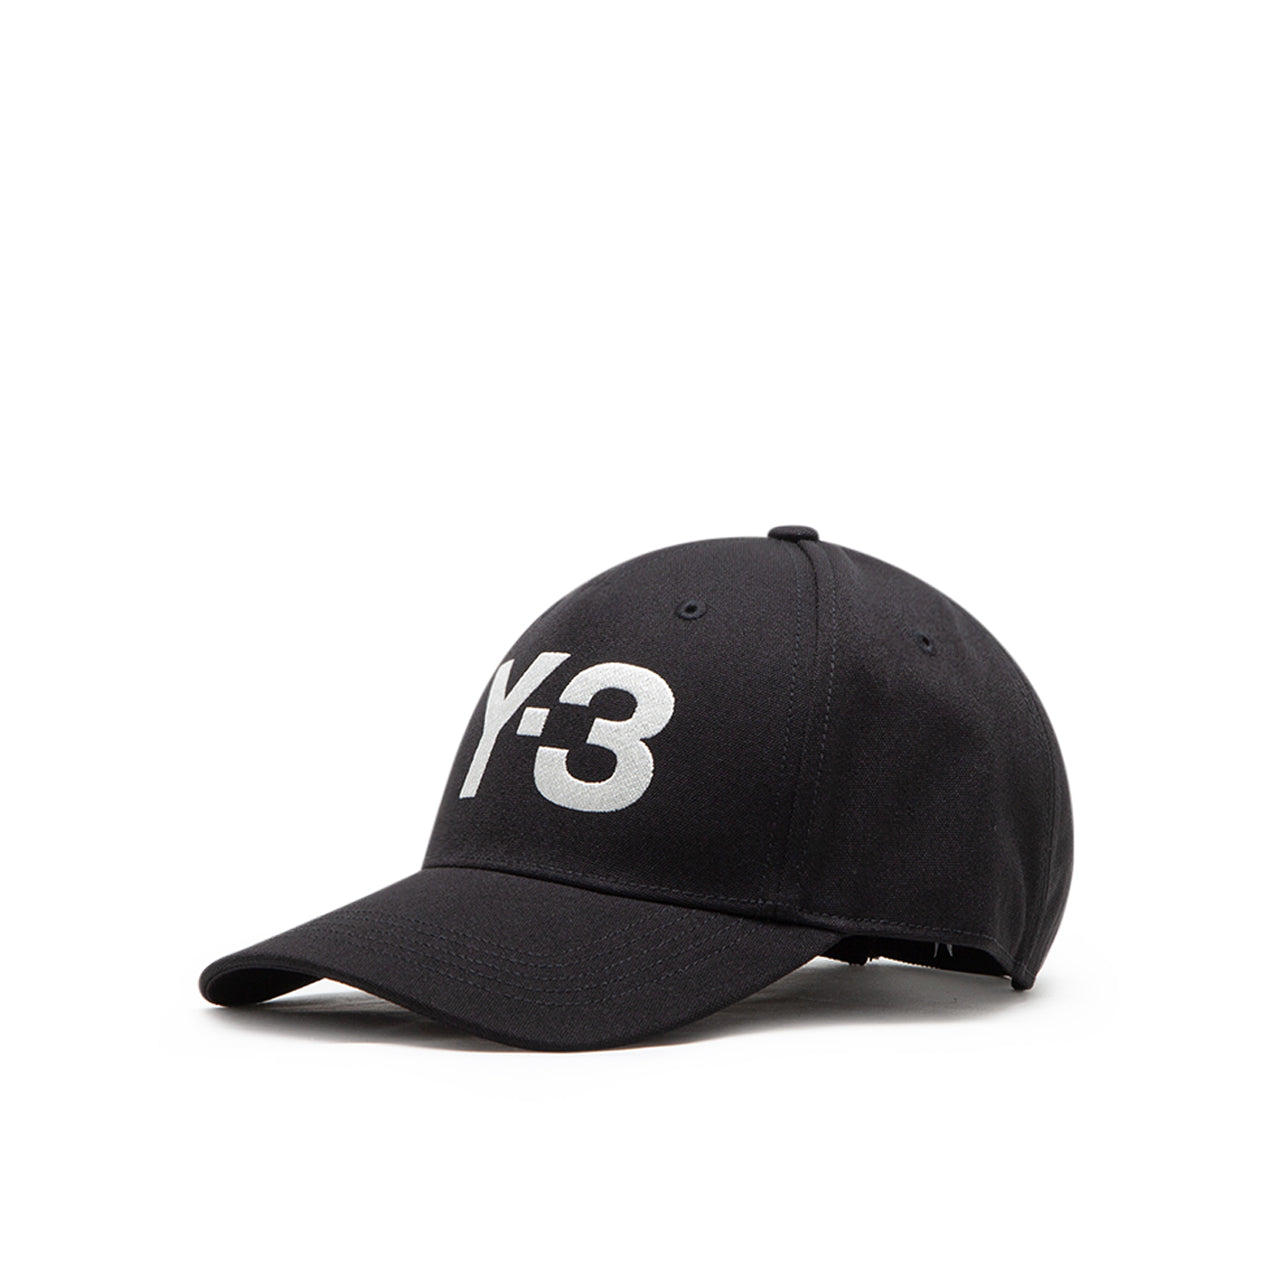 adidas y-3 logo cap (black / white)